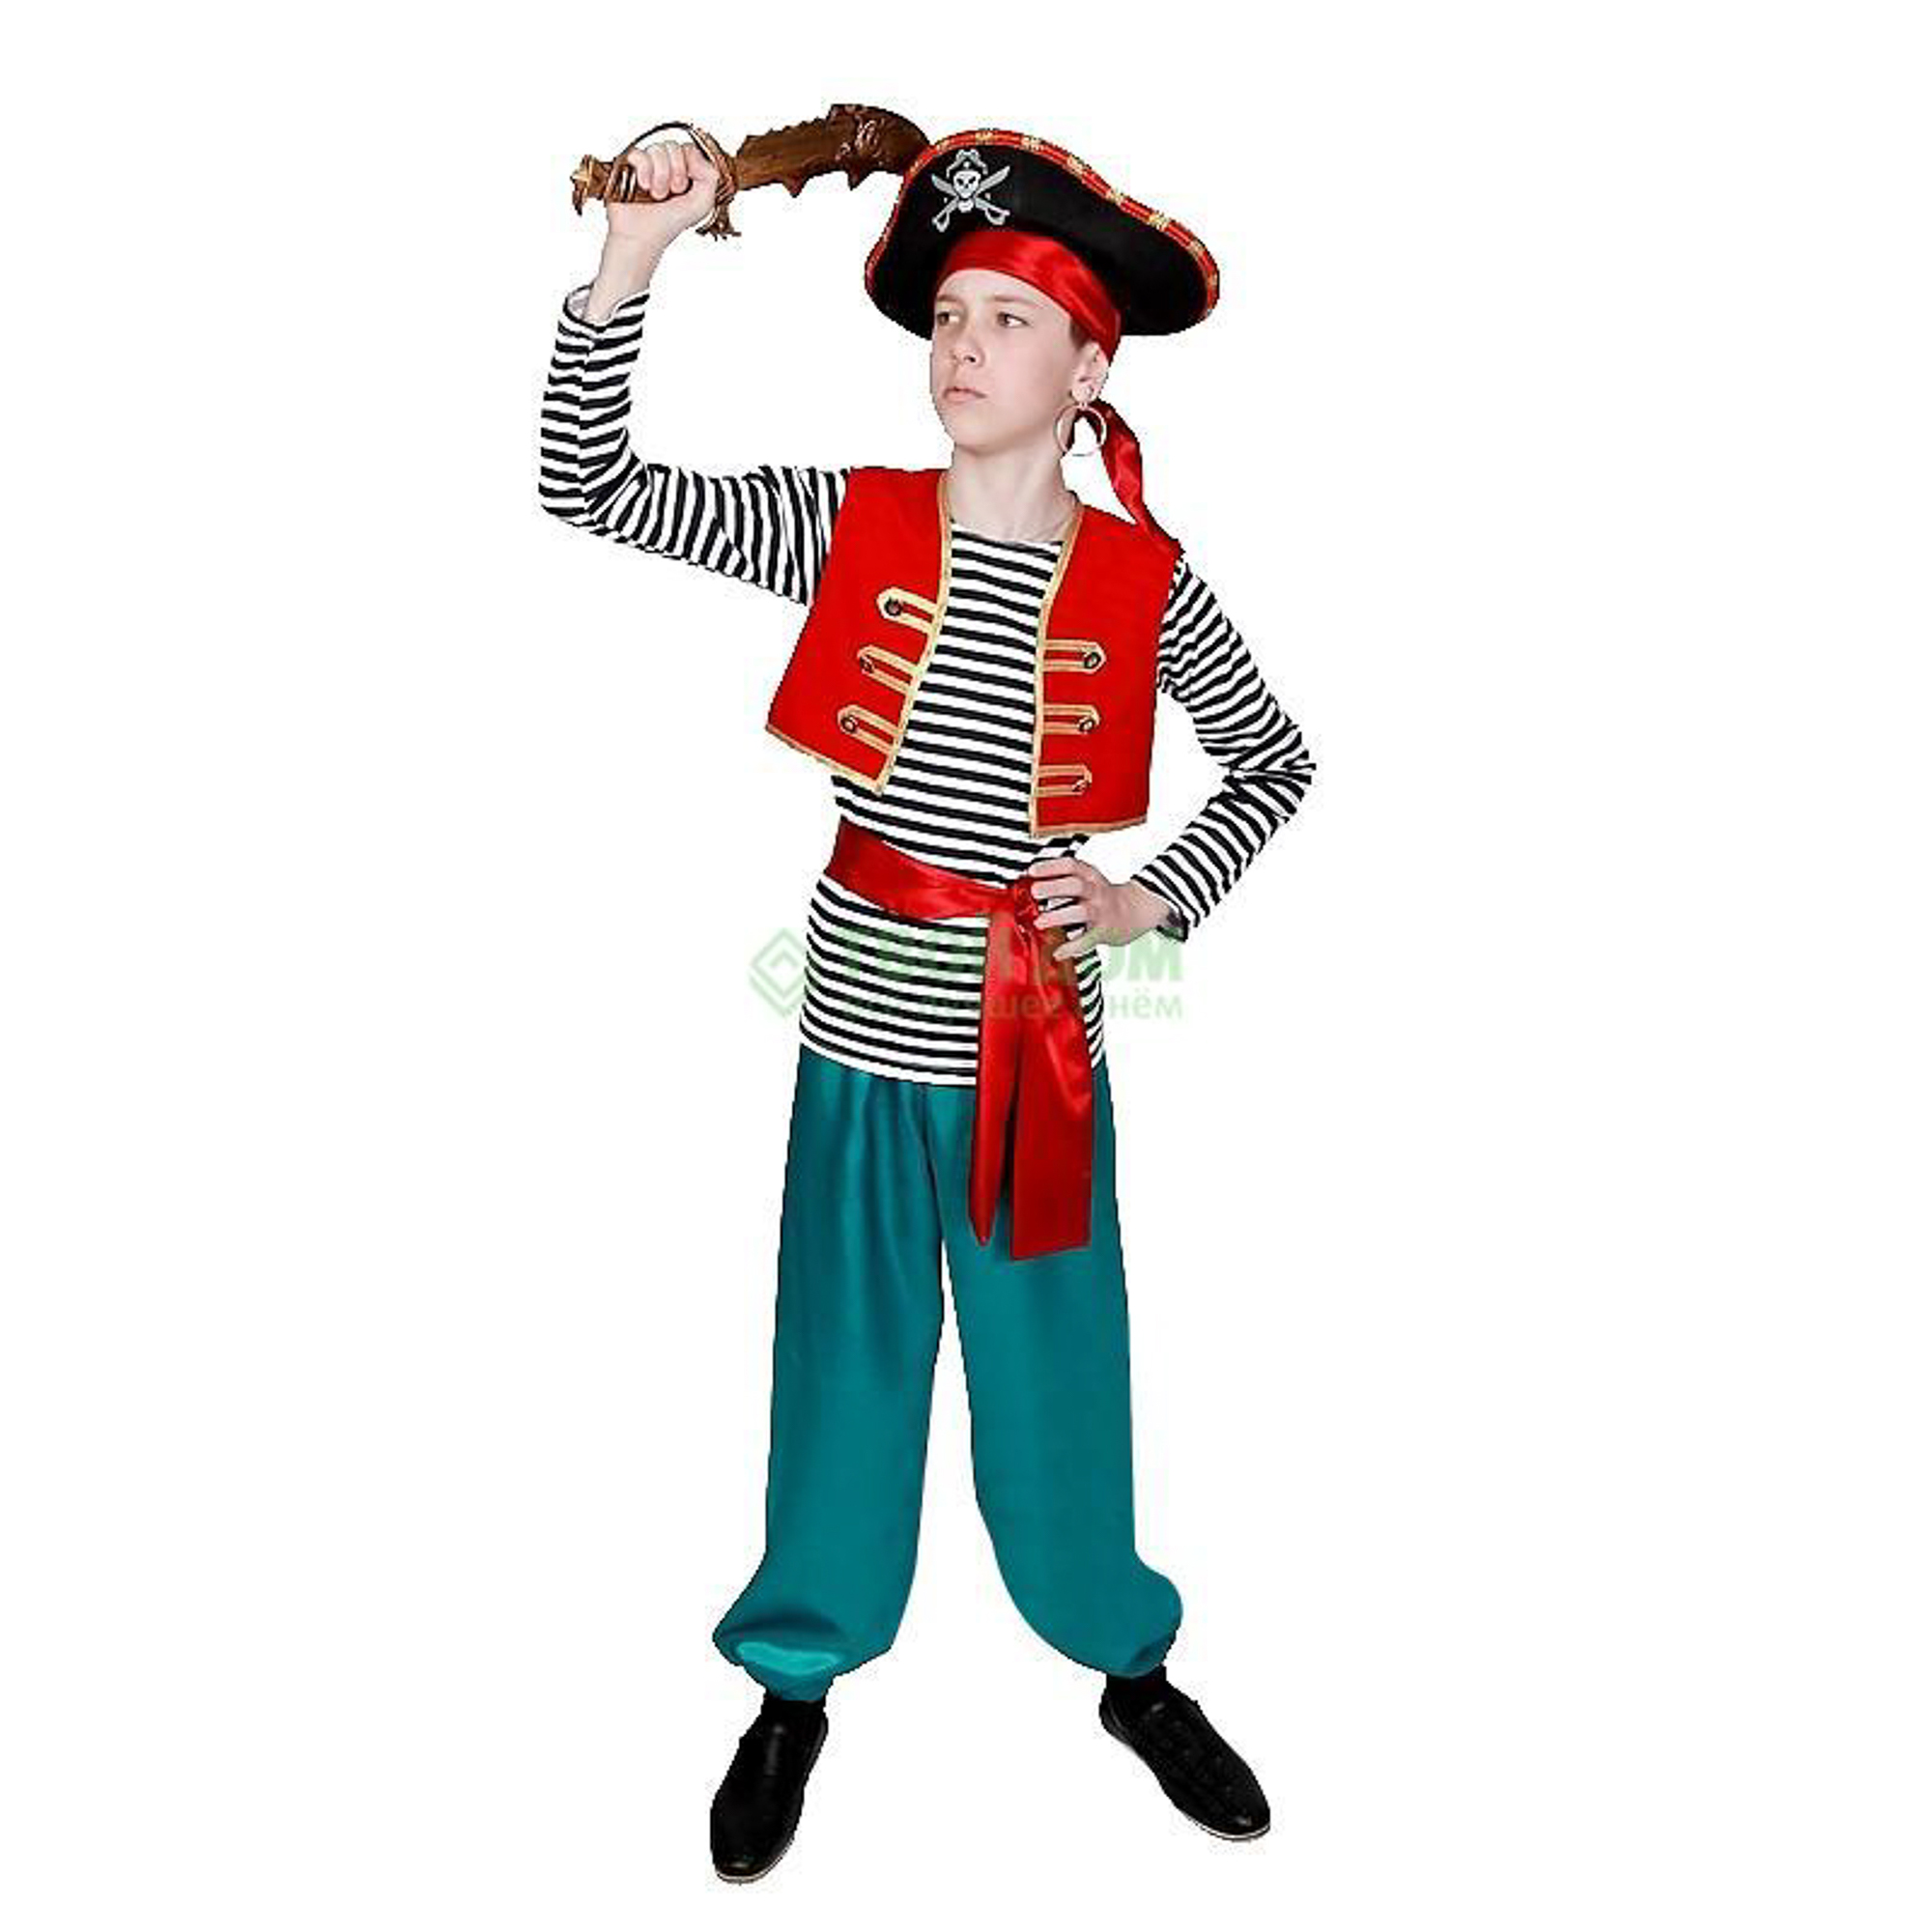 Костюм артэ. Пират костюм, грим. Костюм пирата зеленый. Костюм пирата макияж. Новогодний костюм пират зеленый.